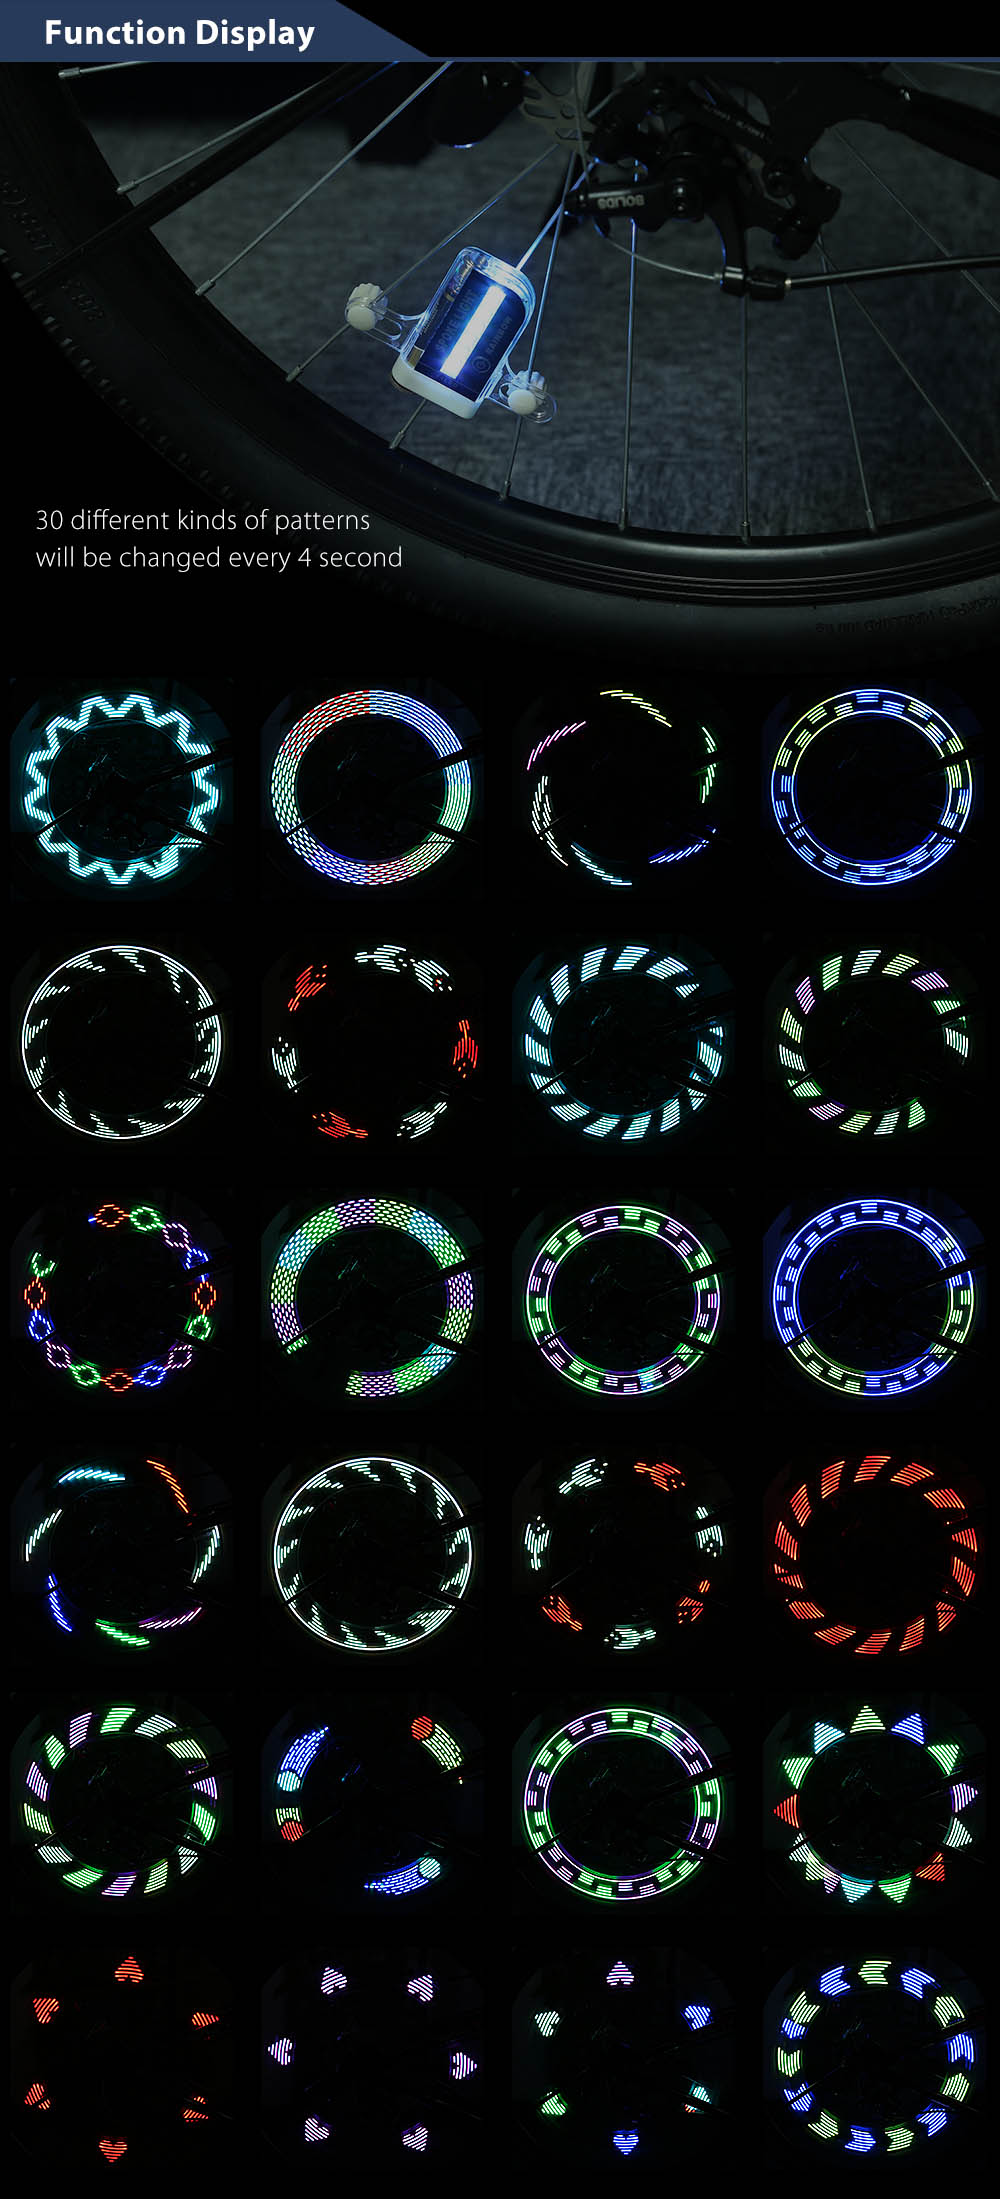 Cycling Spoke Light 30-patterns Transform Bicycle Wheel LED Colorful Light